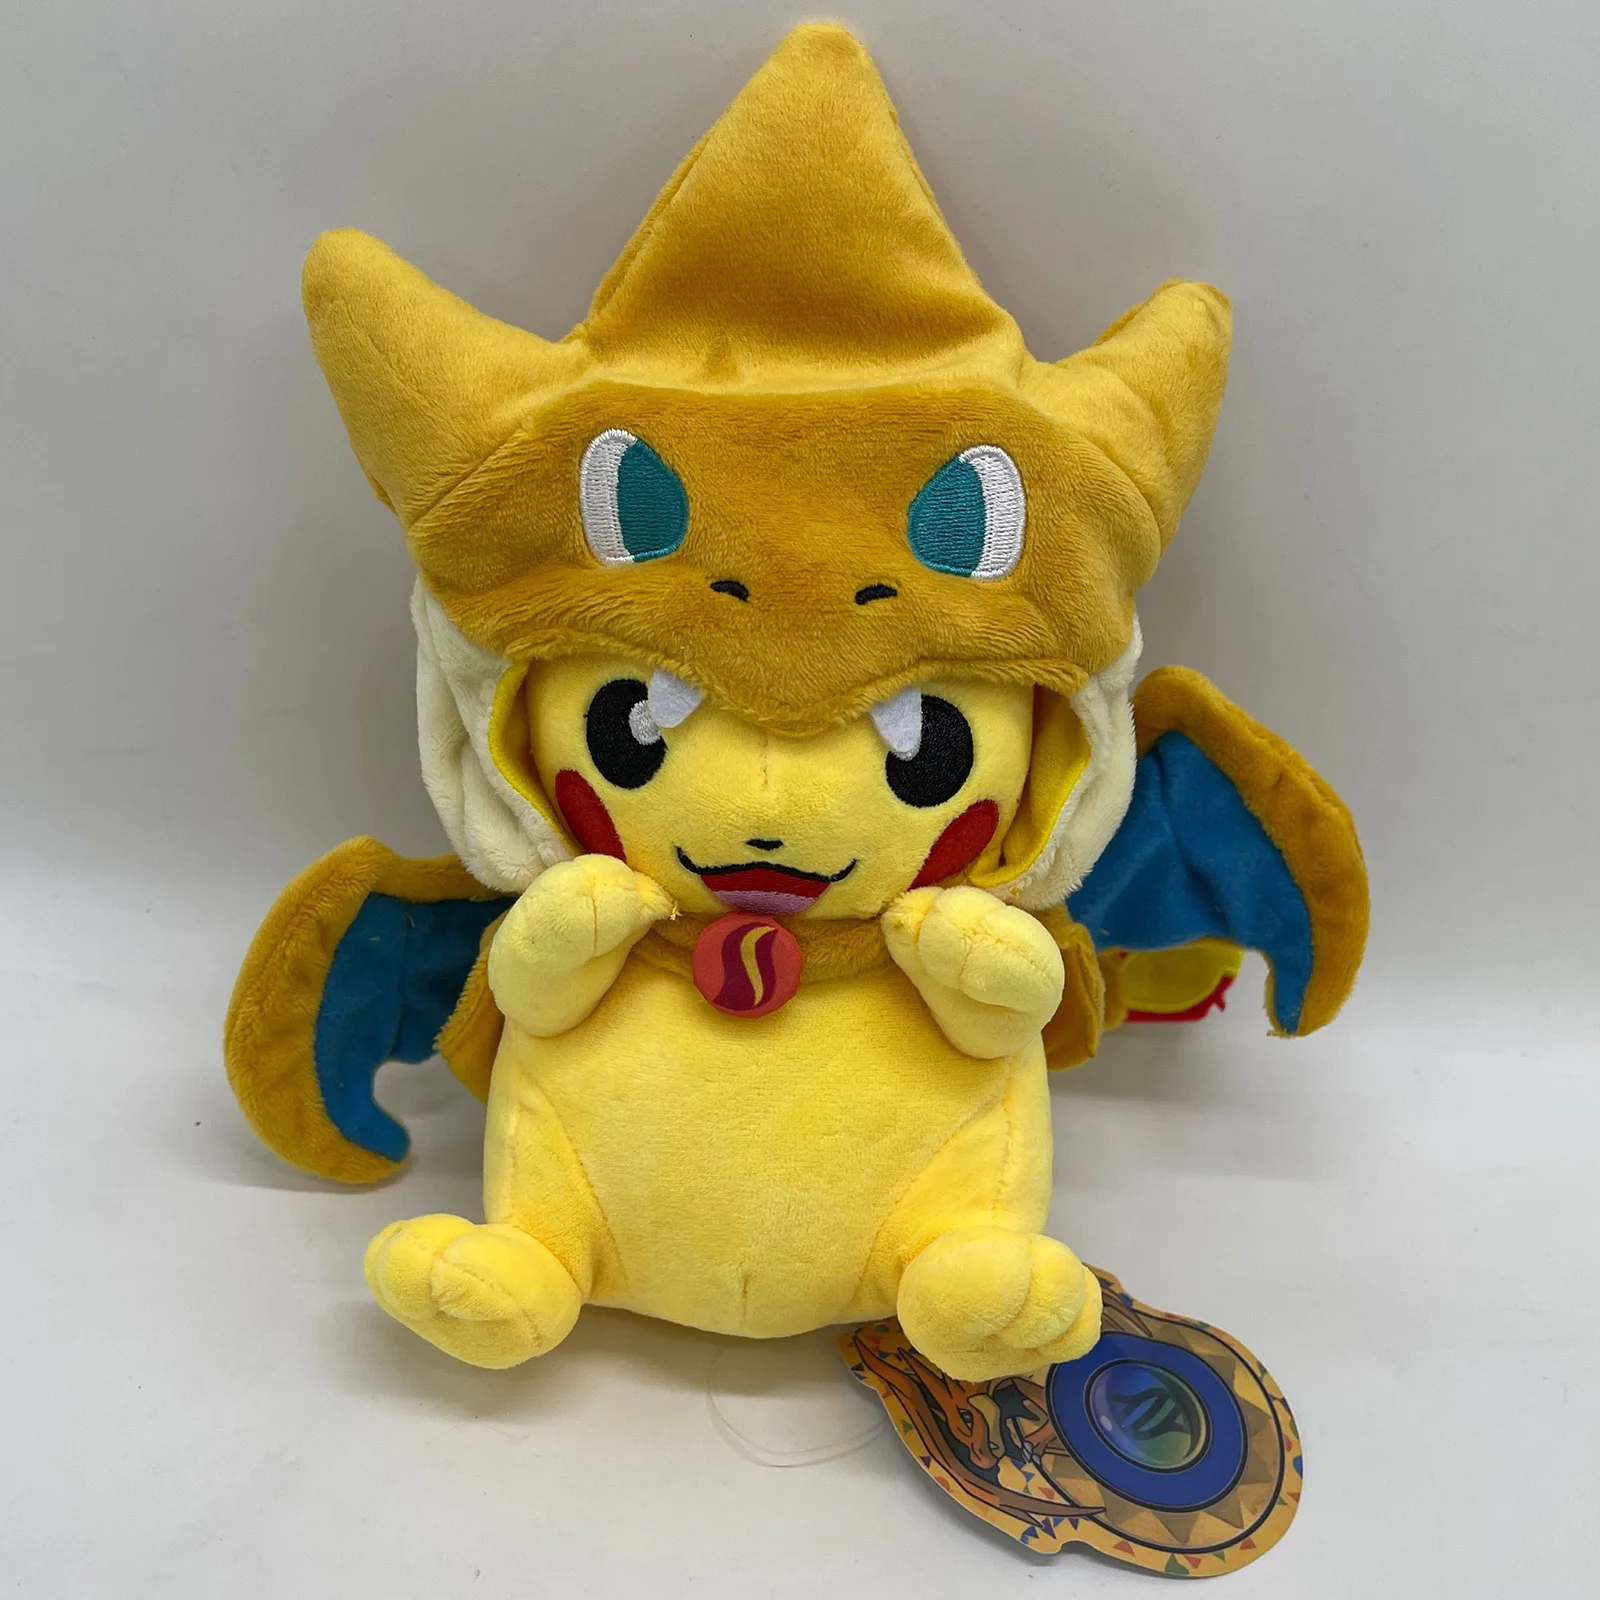 Pokemon pikachu cosplay mega charizard y costume plush soft toy doll teddy 9 thumb200